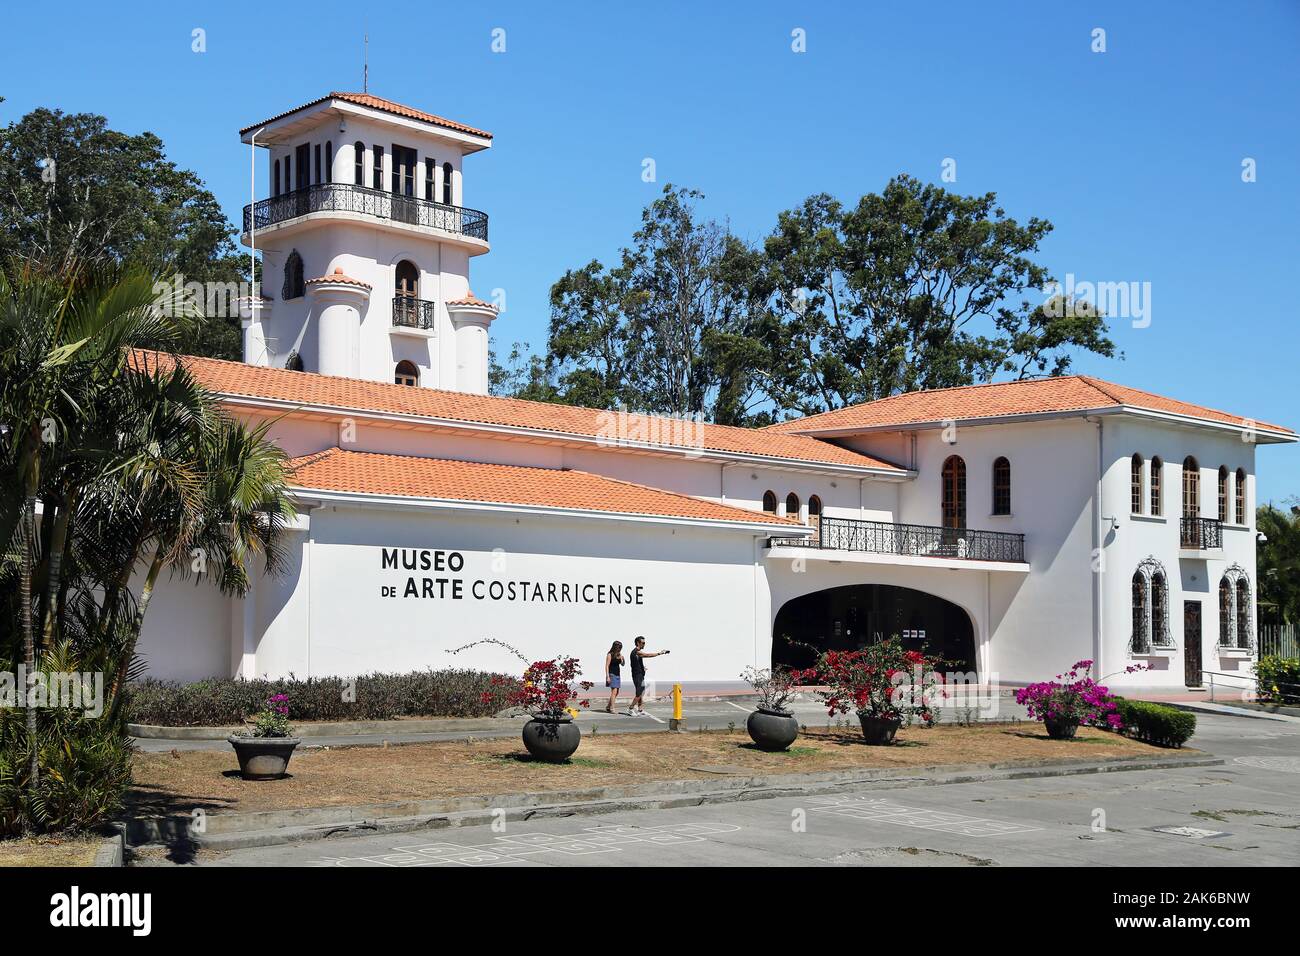 Provinz San Jose San Jose/Stadt : Museum für Kunst (costaricanische Museo de Arte Costarricense), Costa Rica dans le monde entier d'utilisation | Banque D'Images